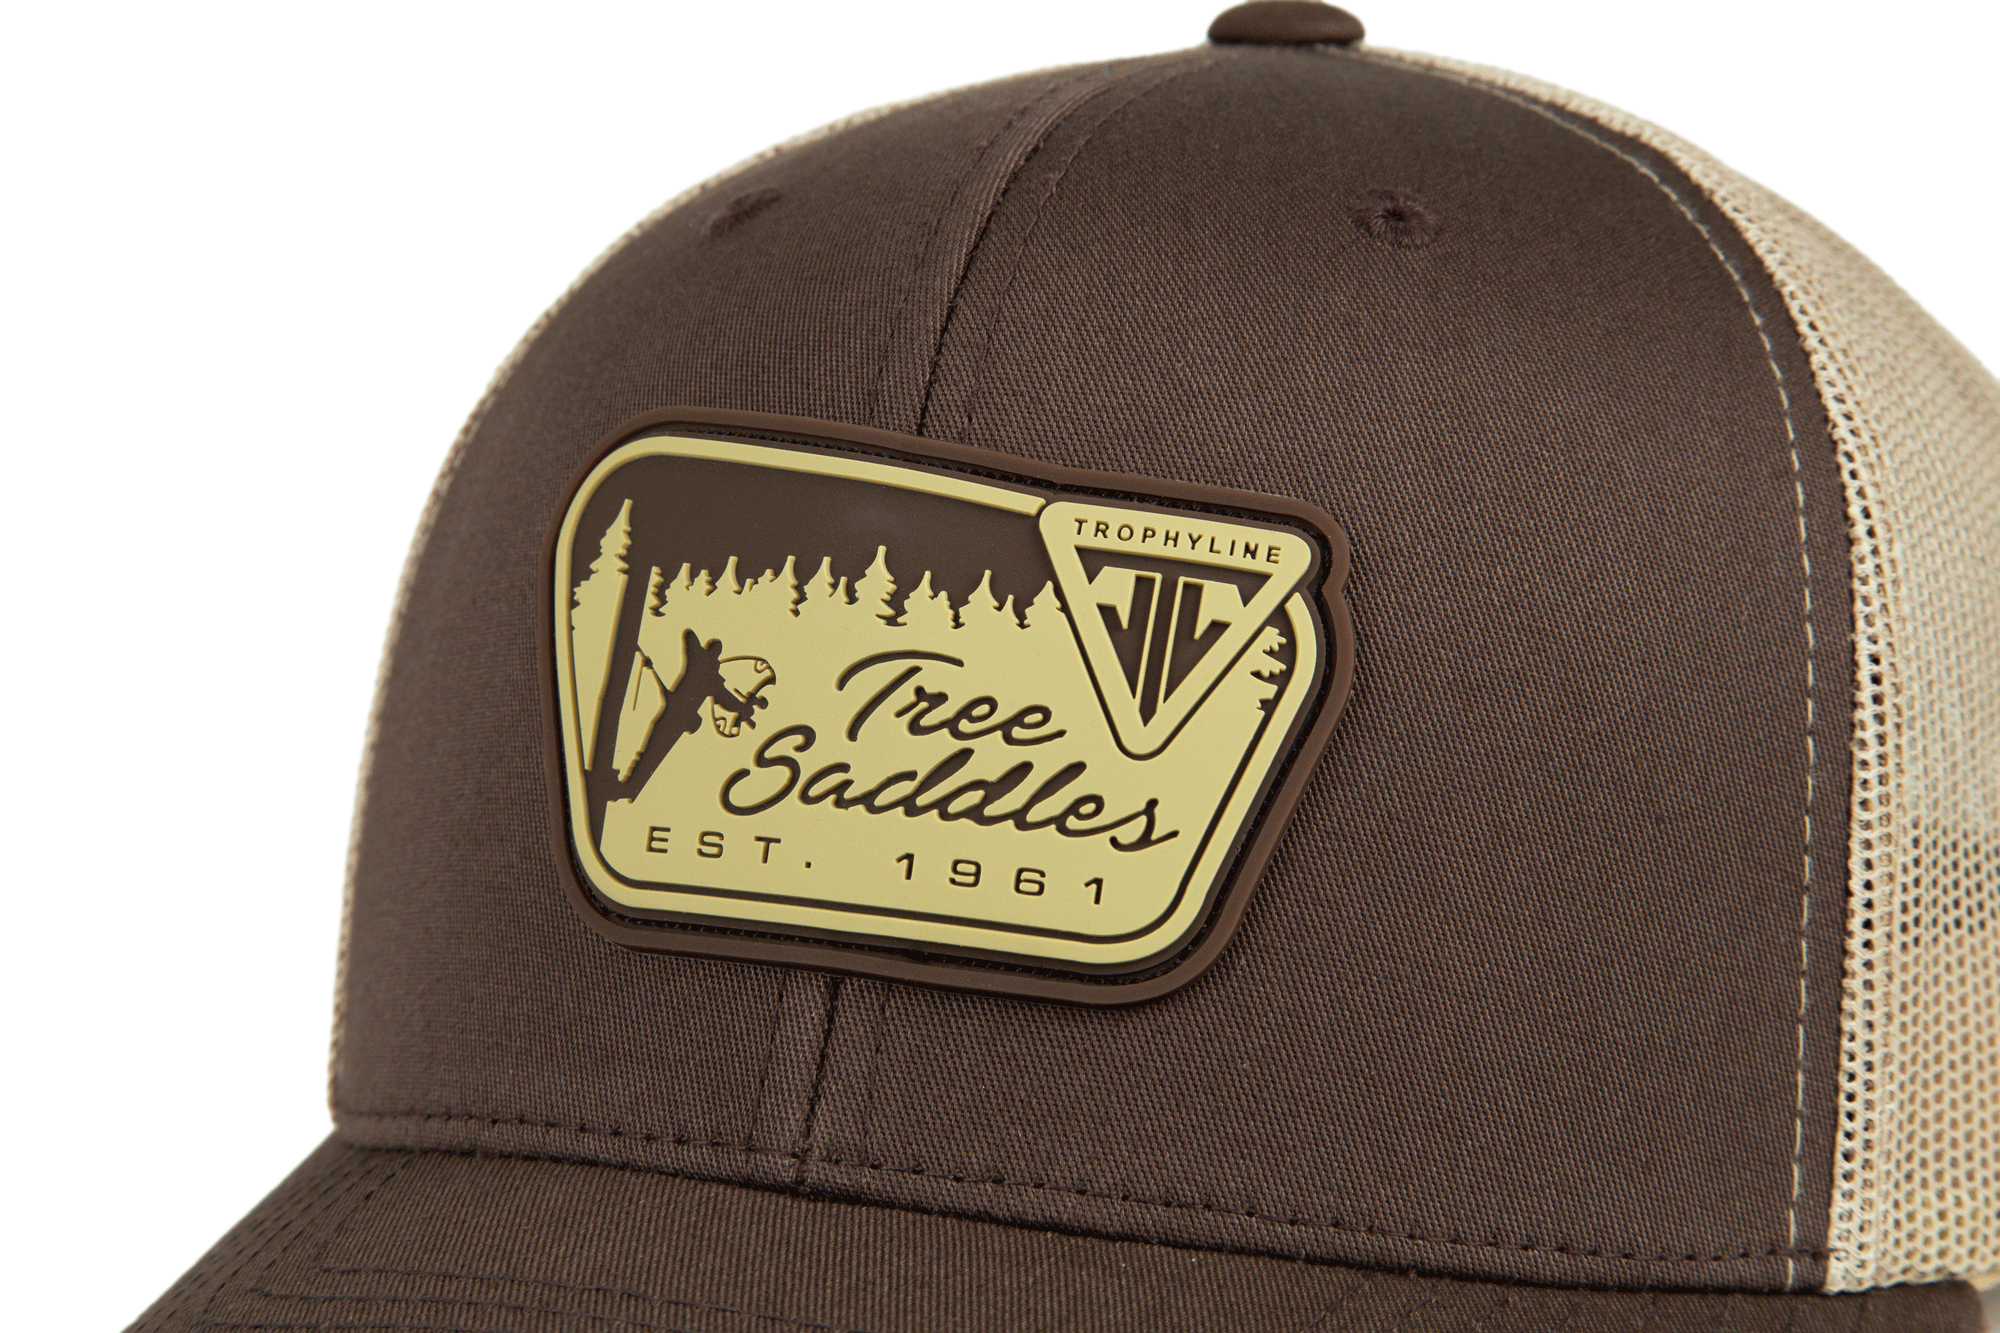 Tree Saddles® Est. 1961 Hat